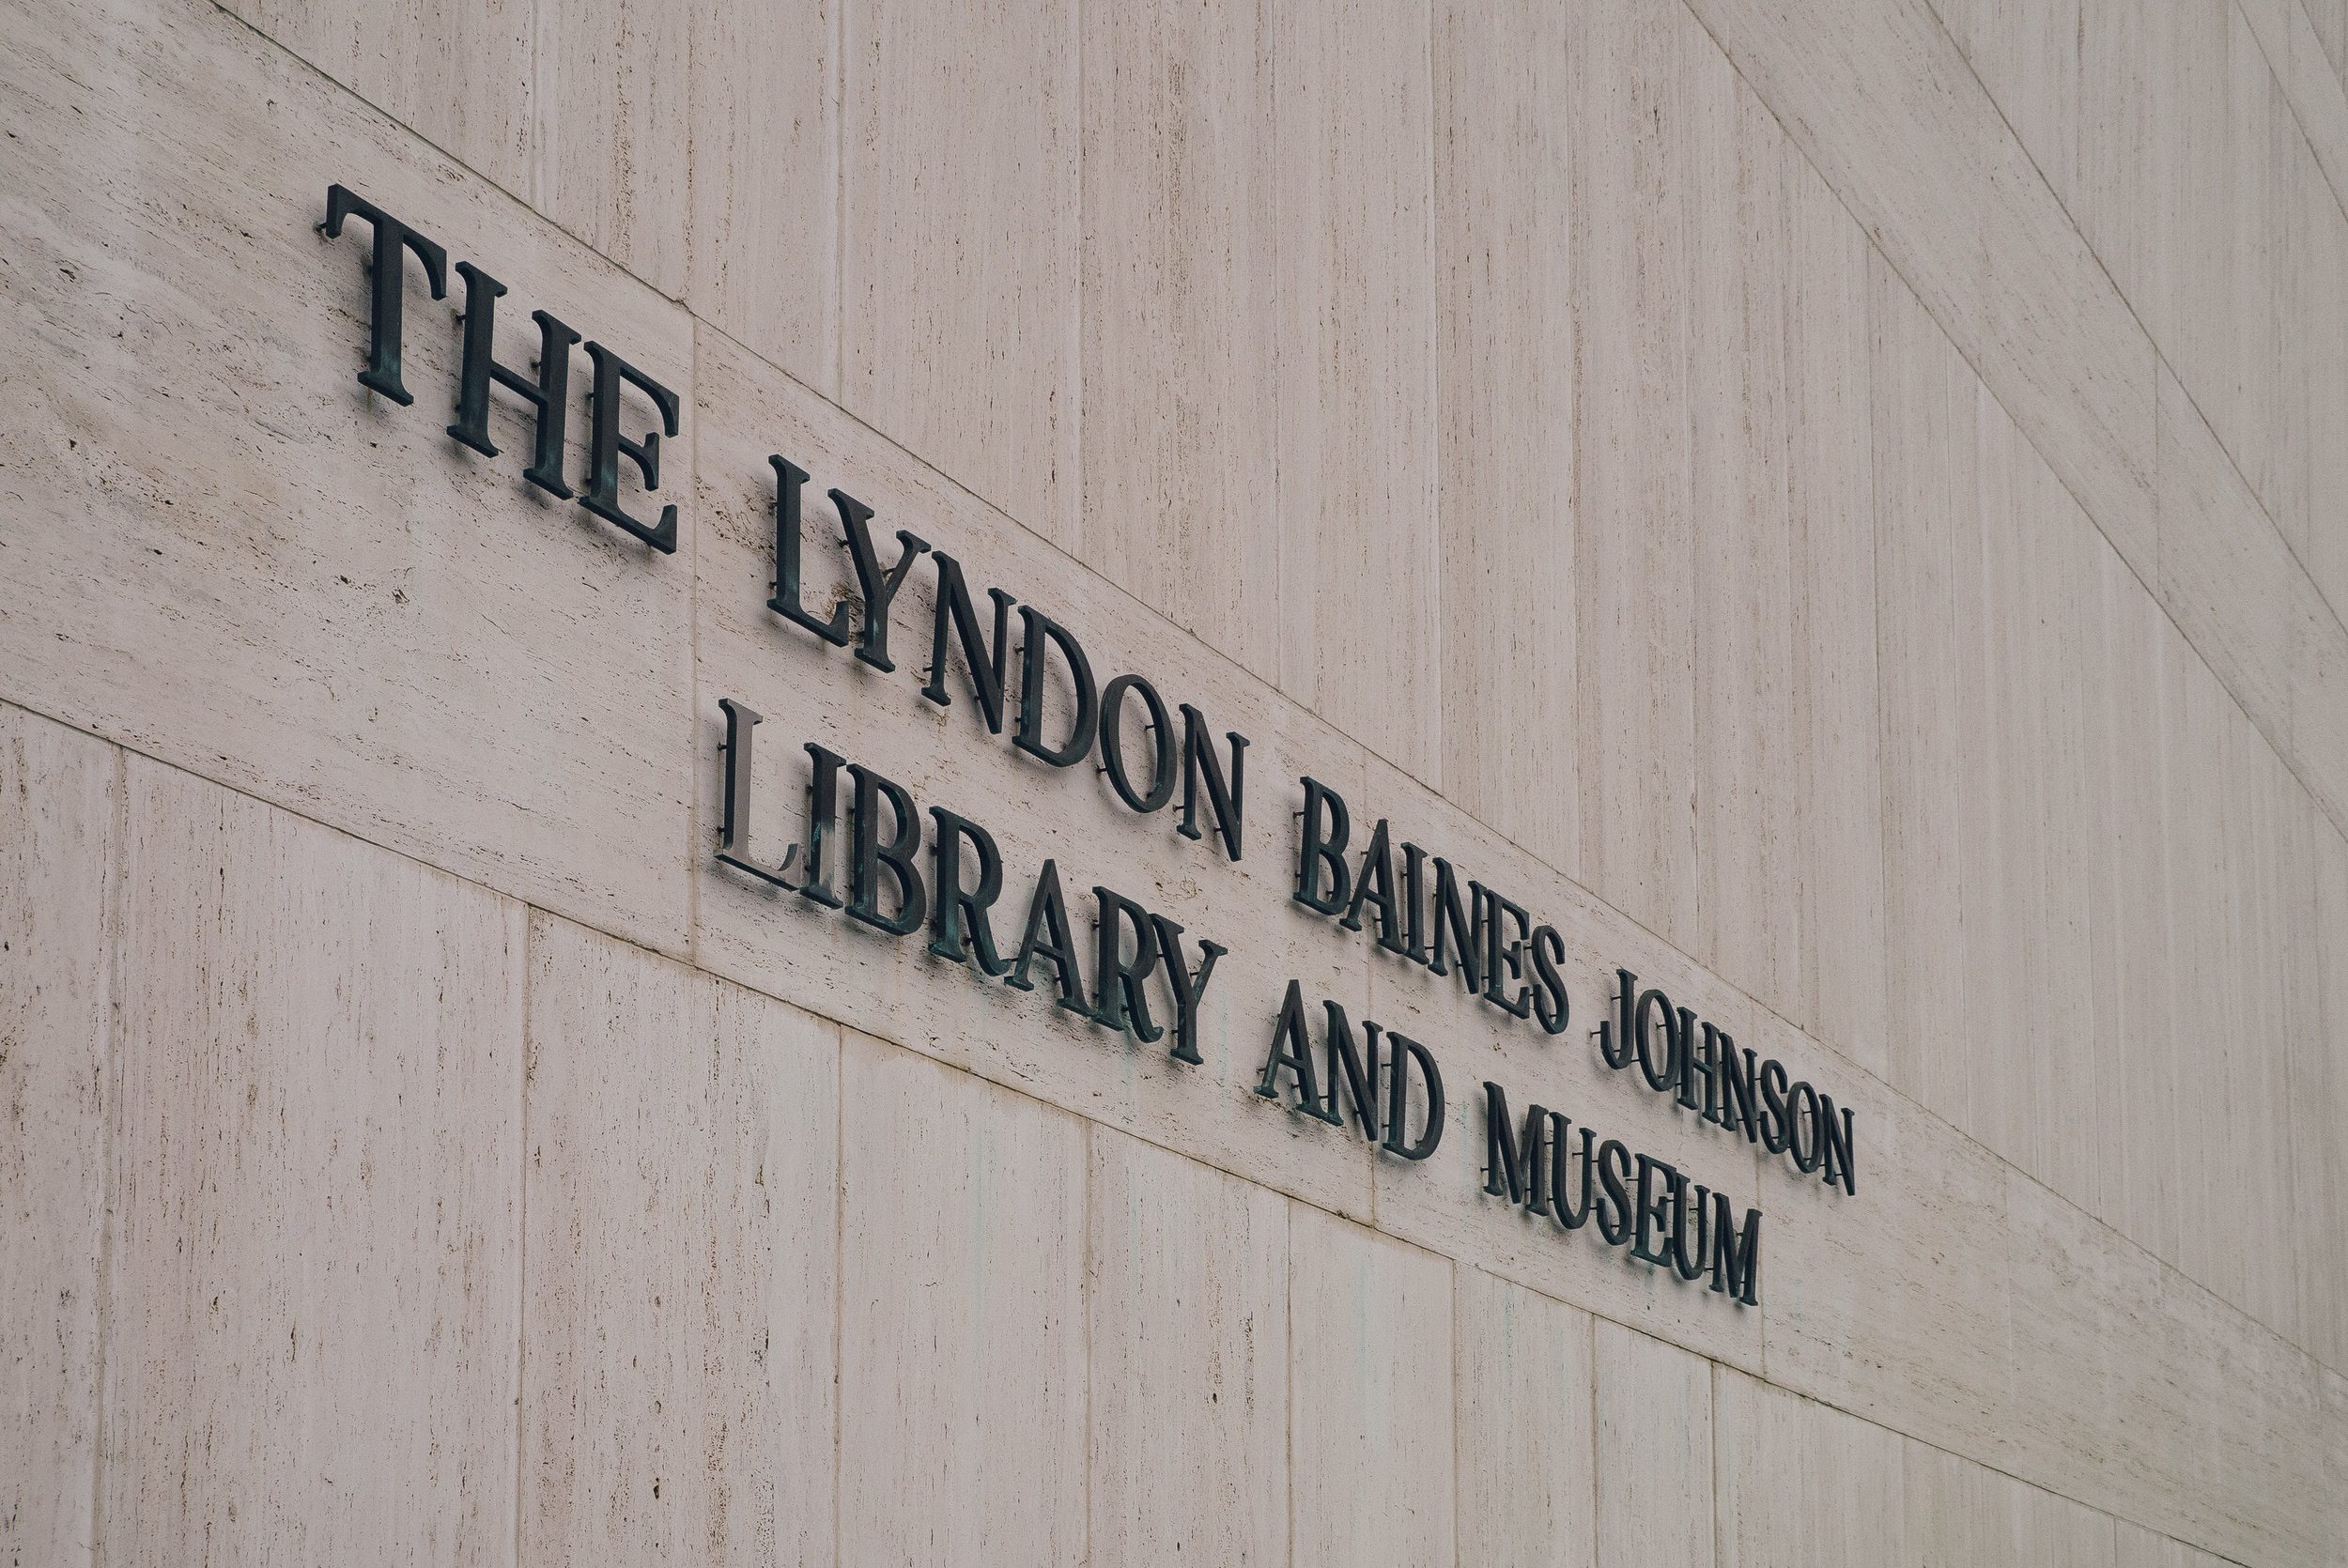 LBJ Presidential Library